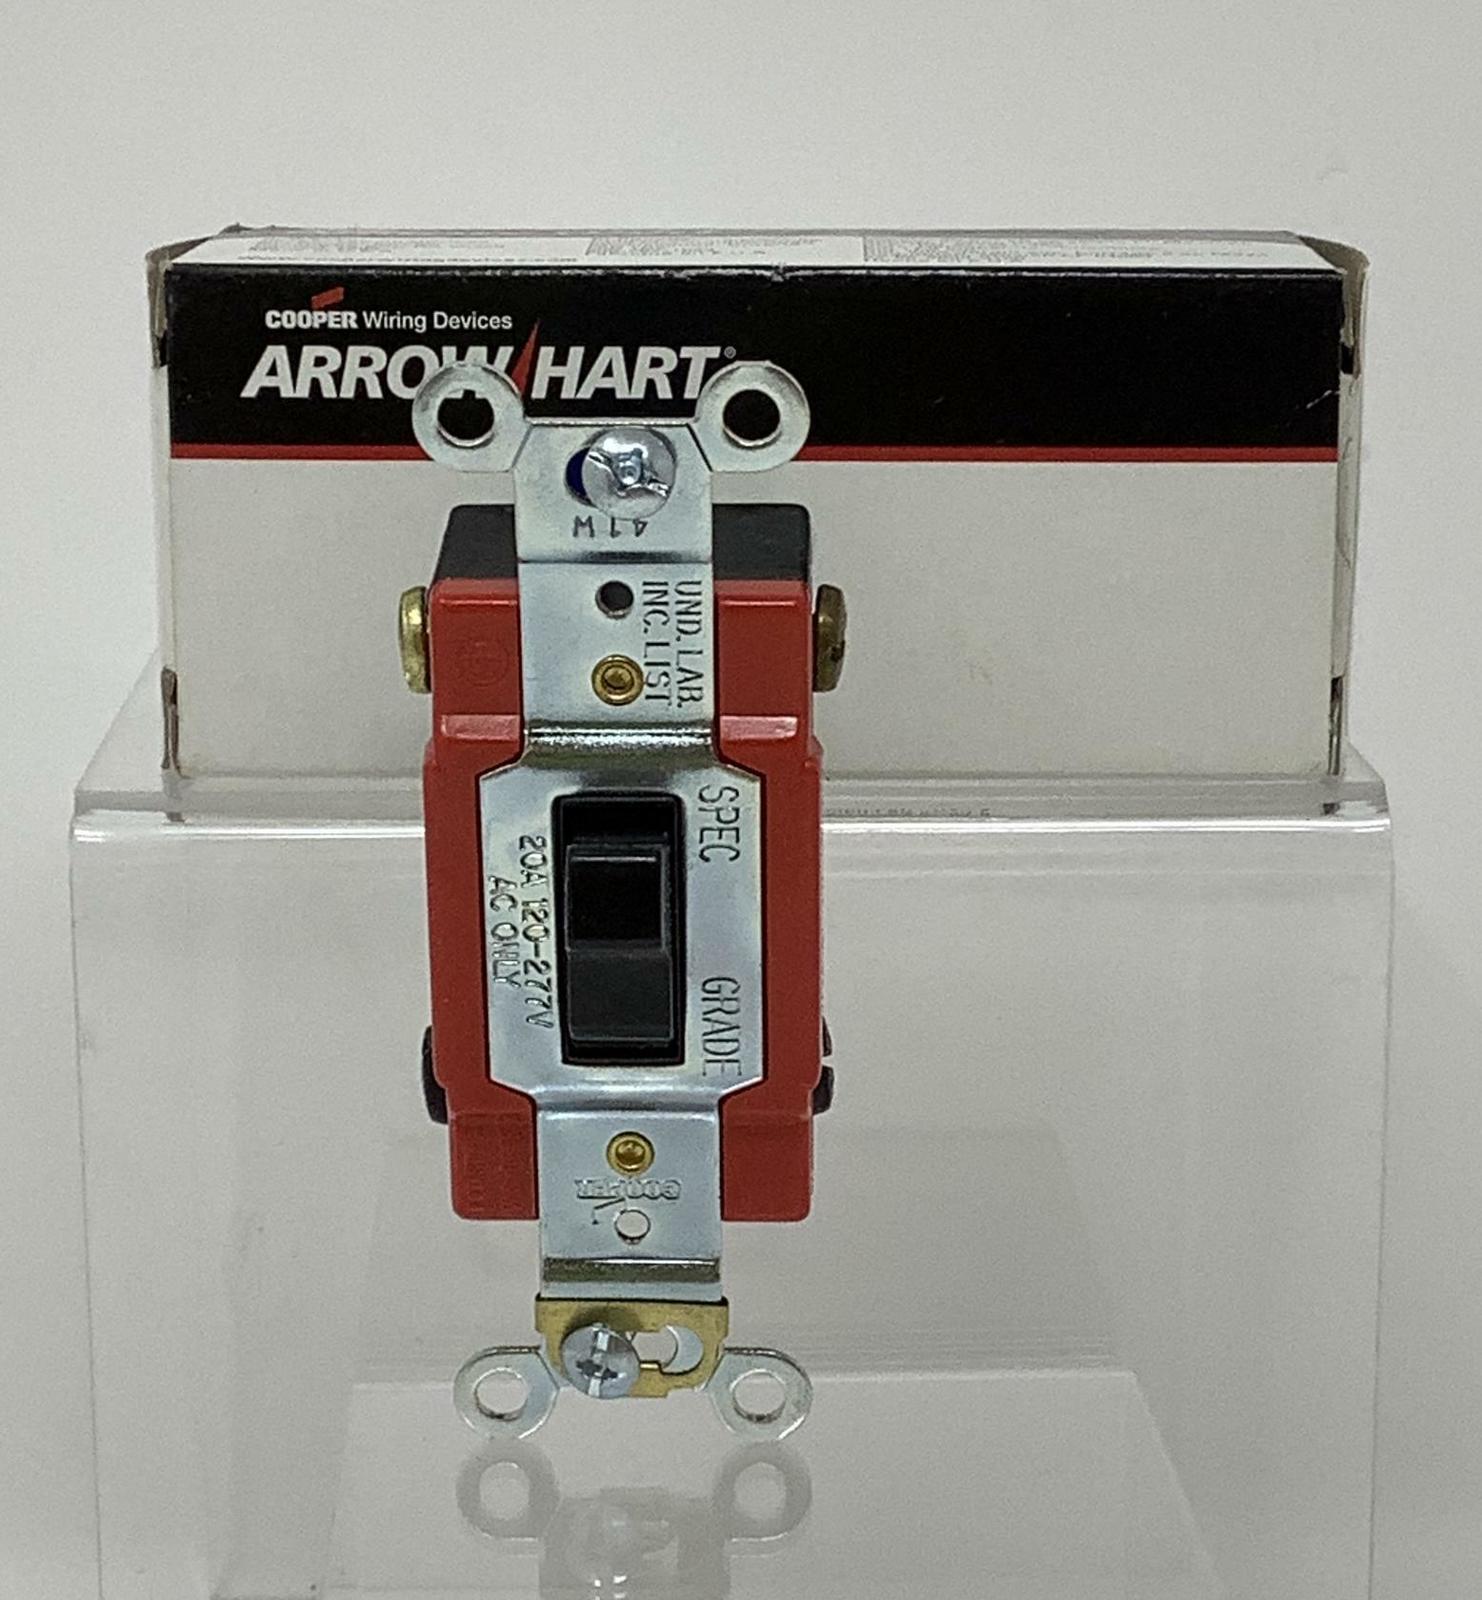 Arrow/Hart Cooper Wiring Industrial 4-Way Interrupter Switch - $13.75